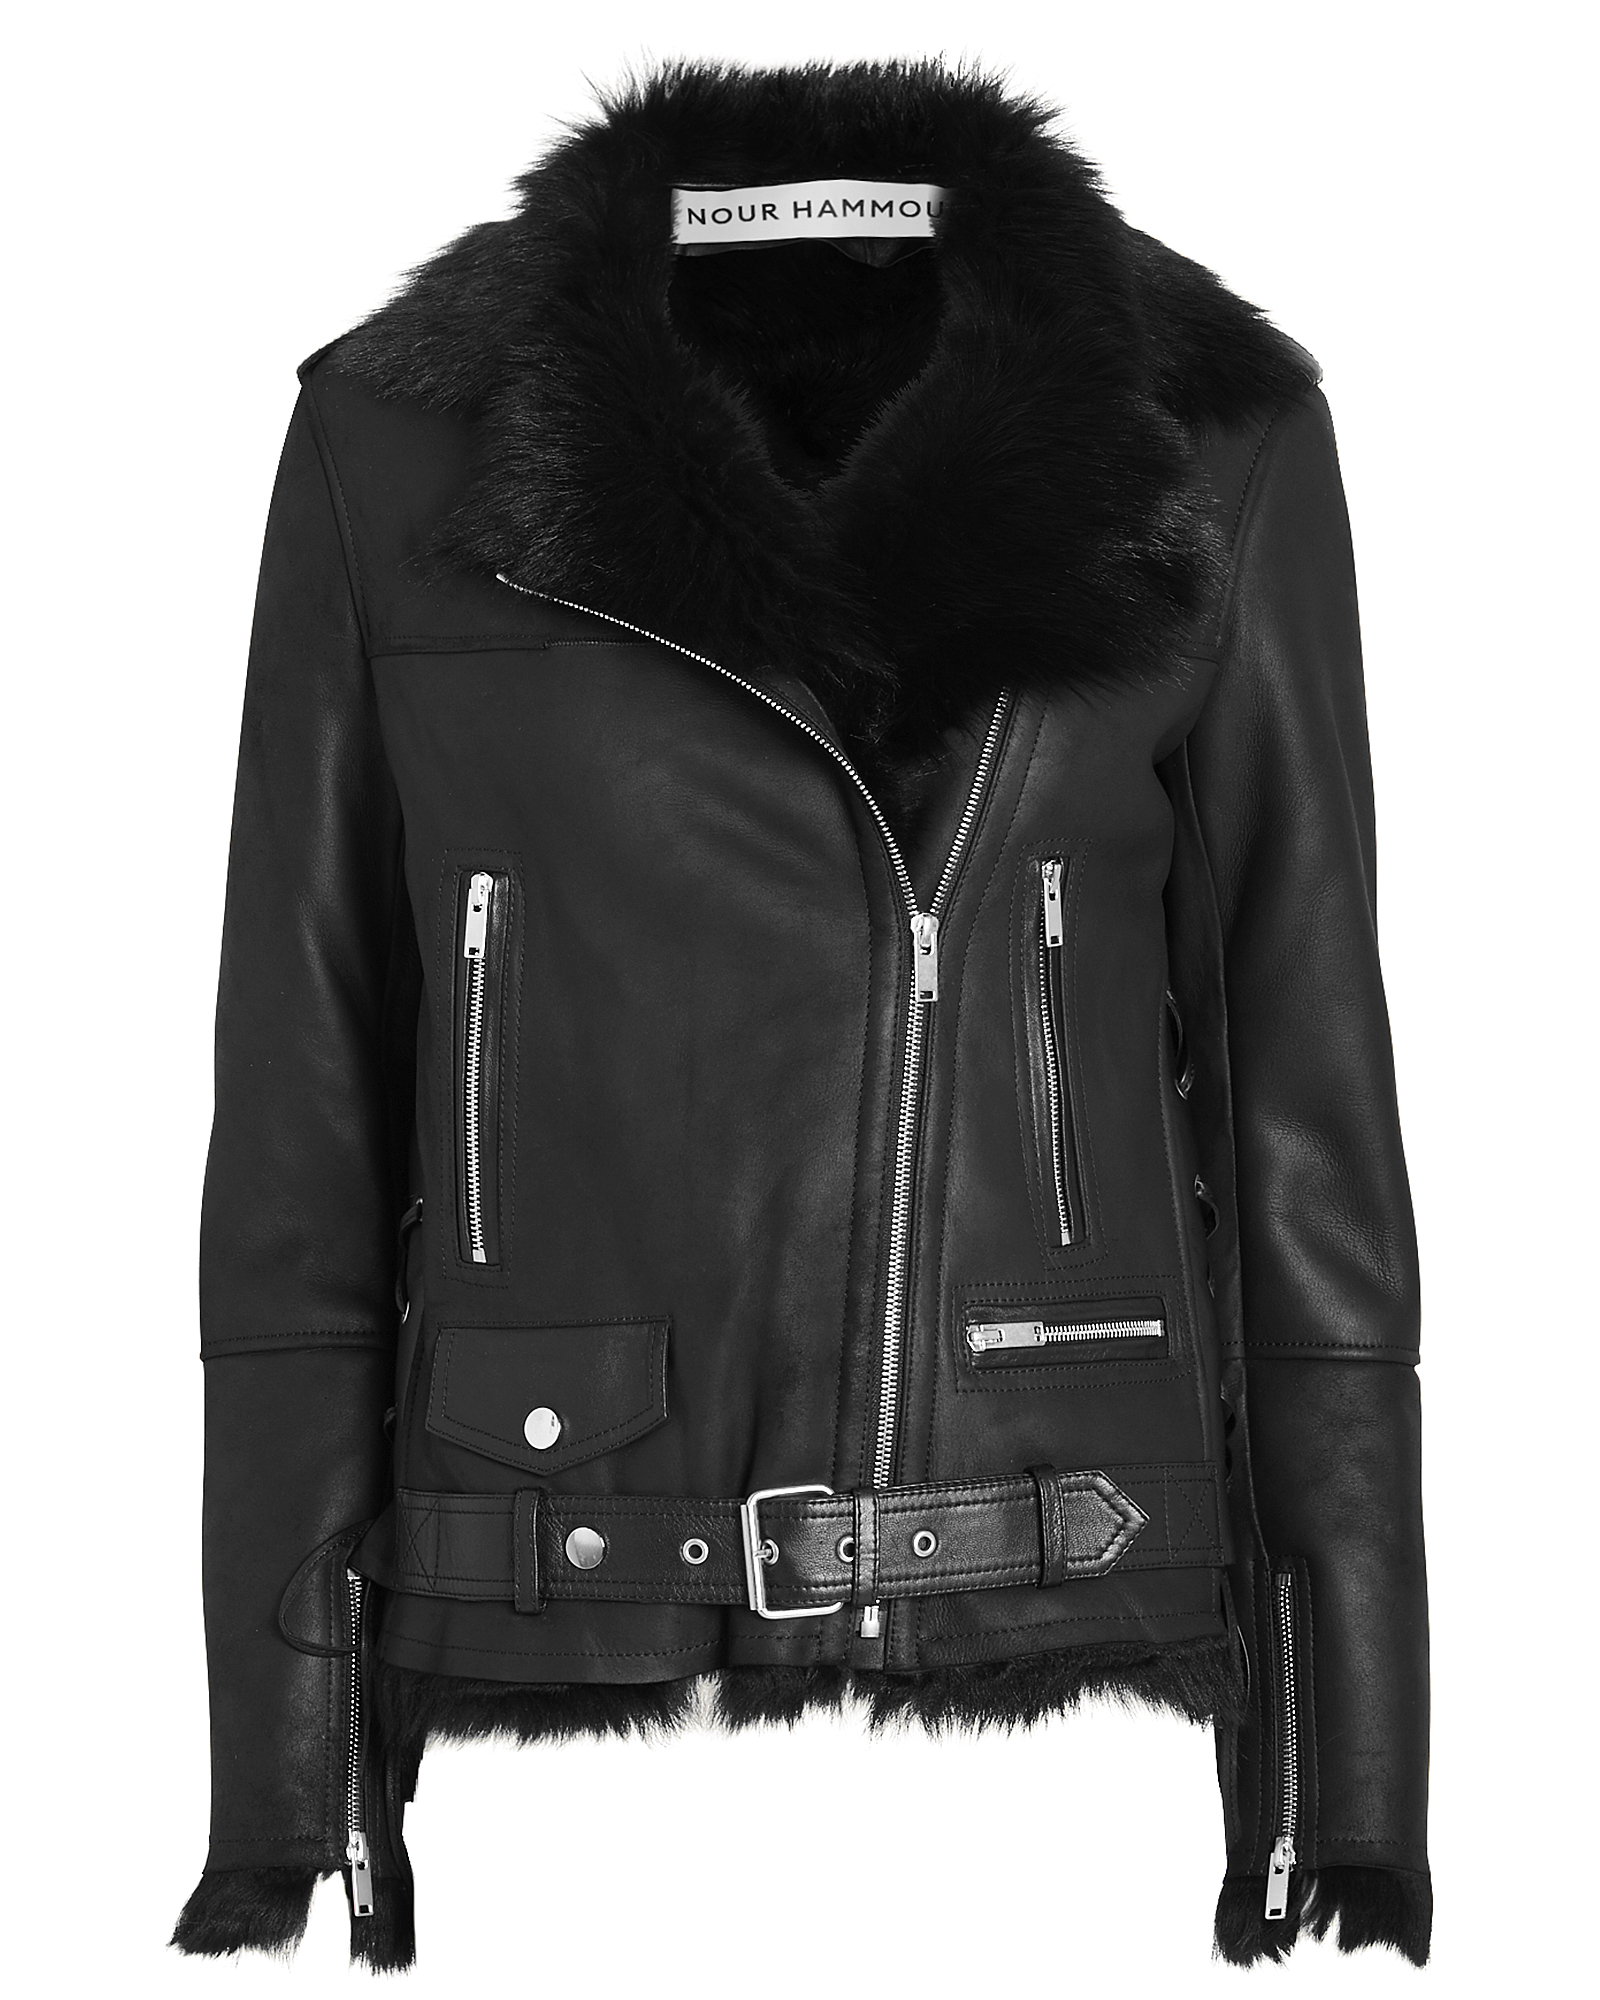 Nour Hammour Vivienne Shearling-Trimmed Moto Jacket in black | INTERMIX®